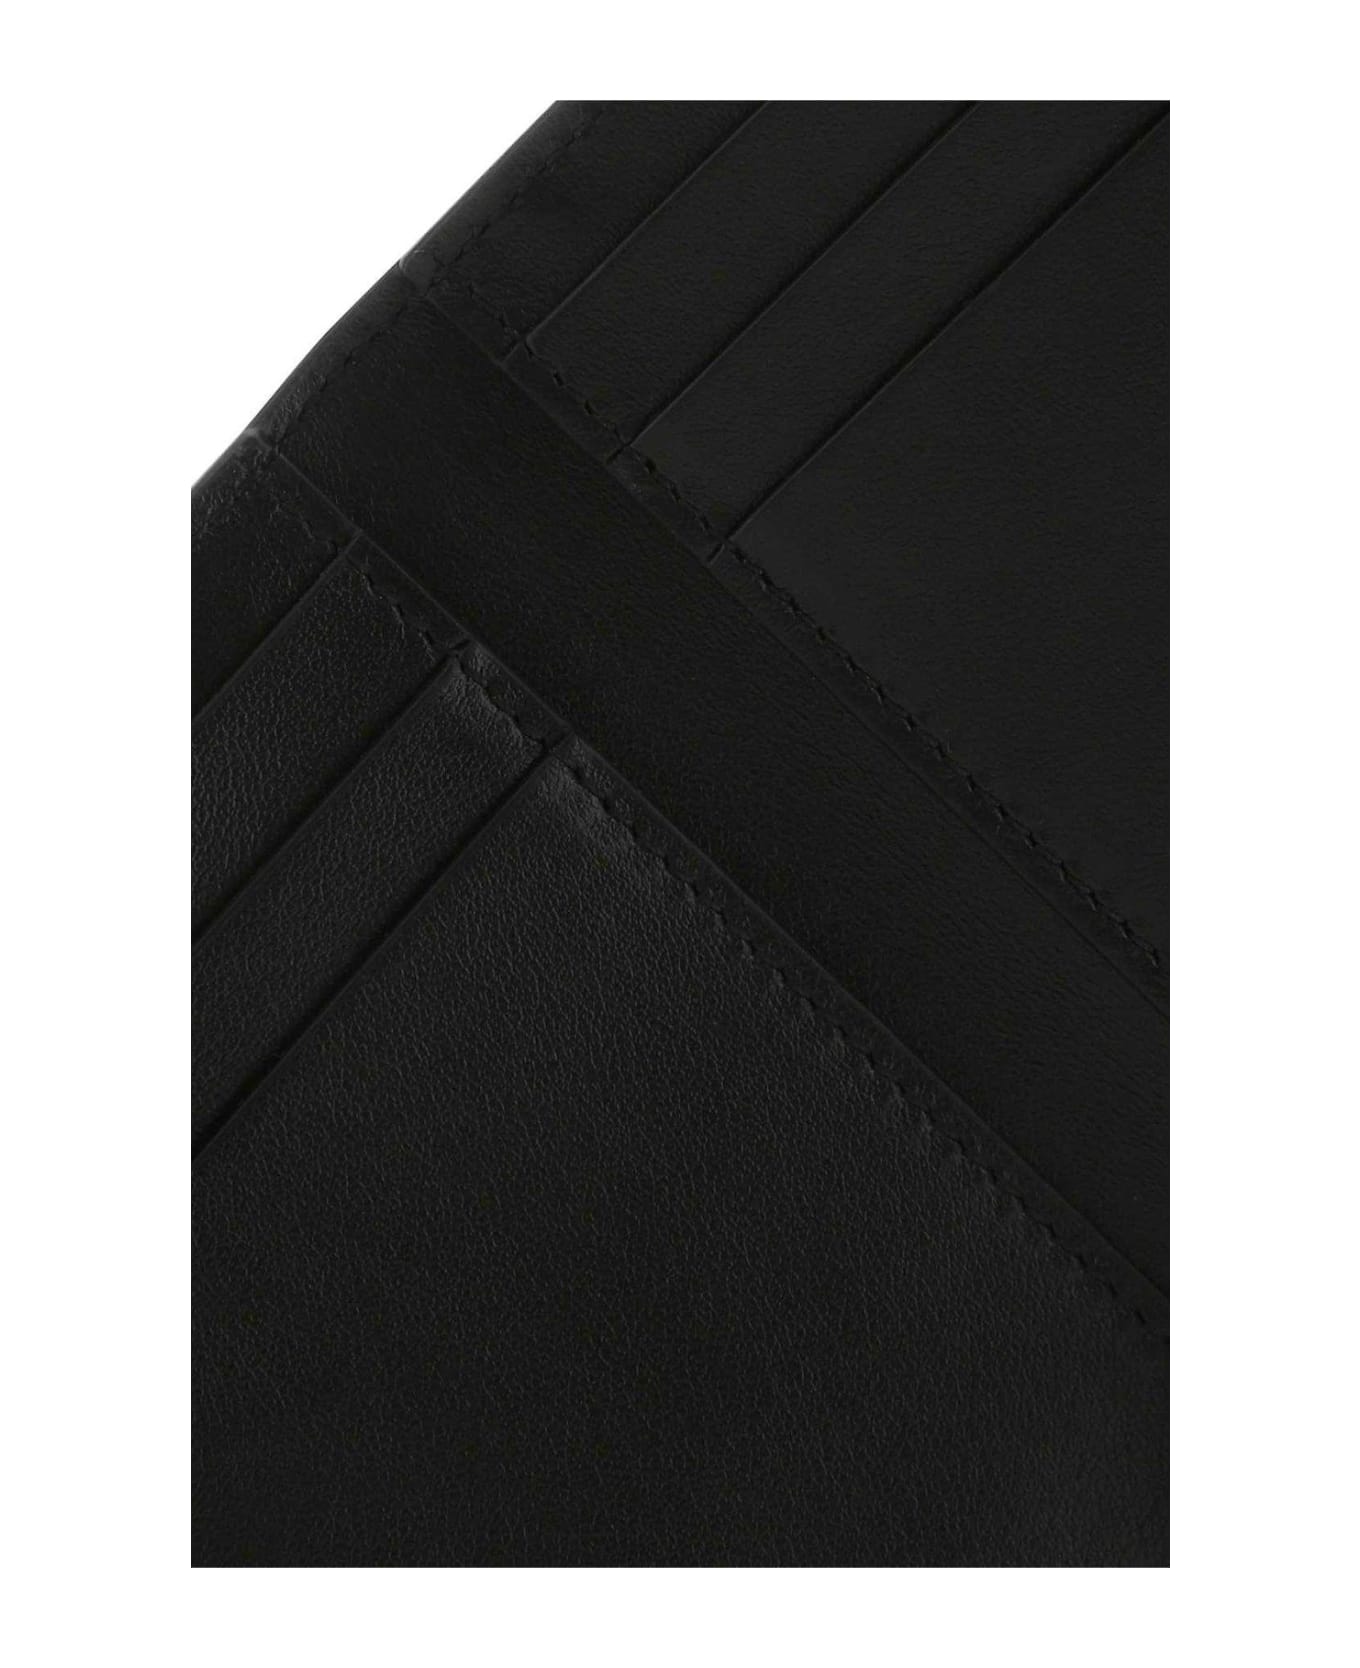 AMBUSH Logo Plaque Bi-fold Wallet - Black